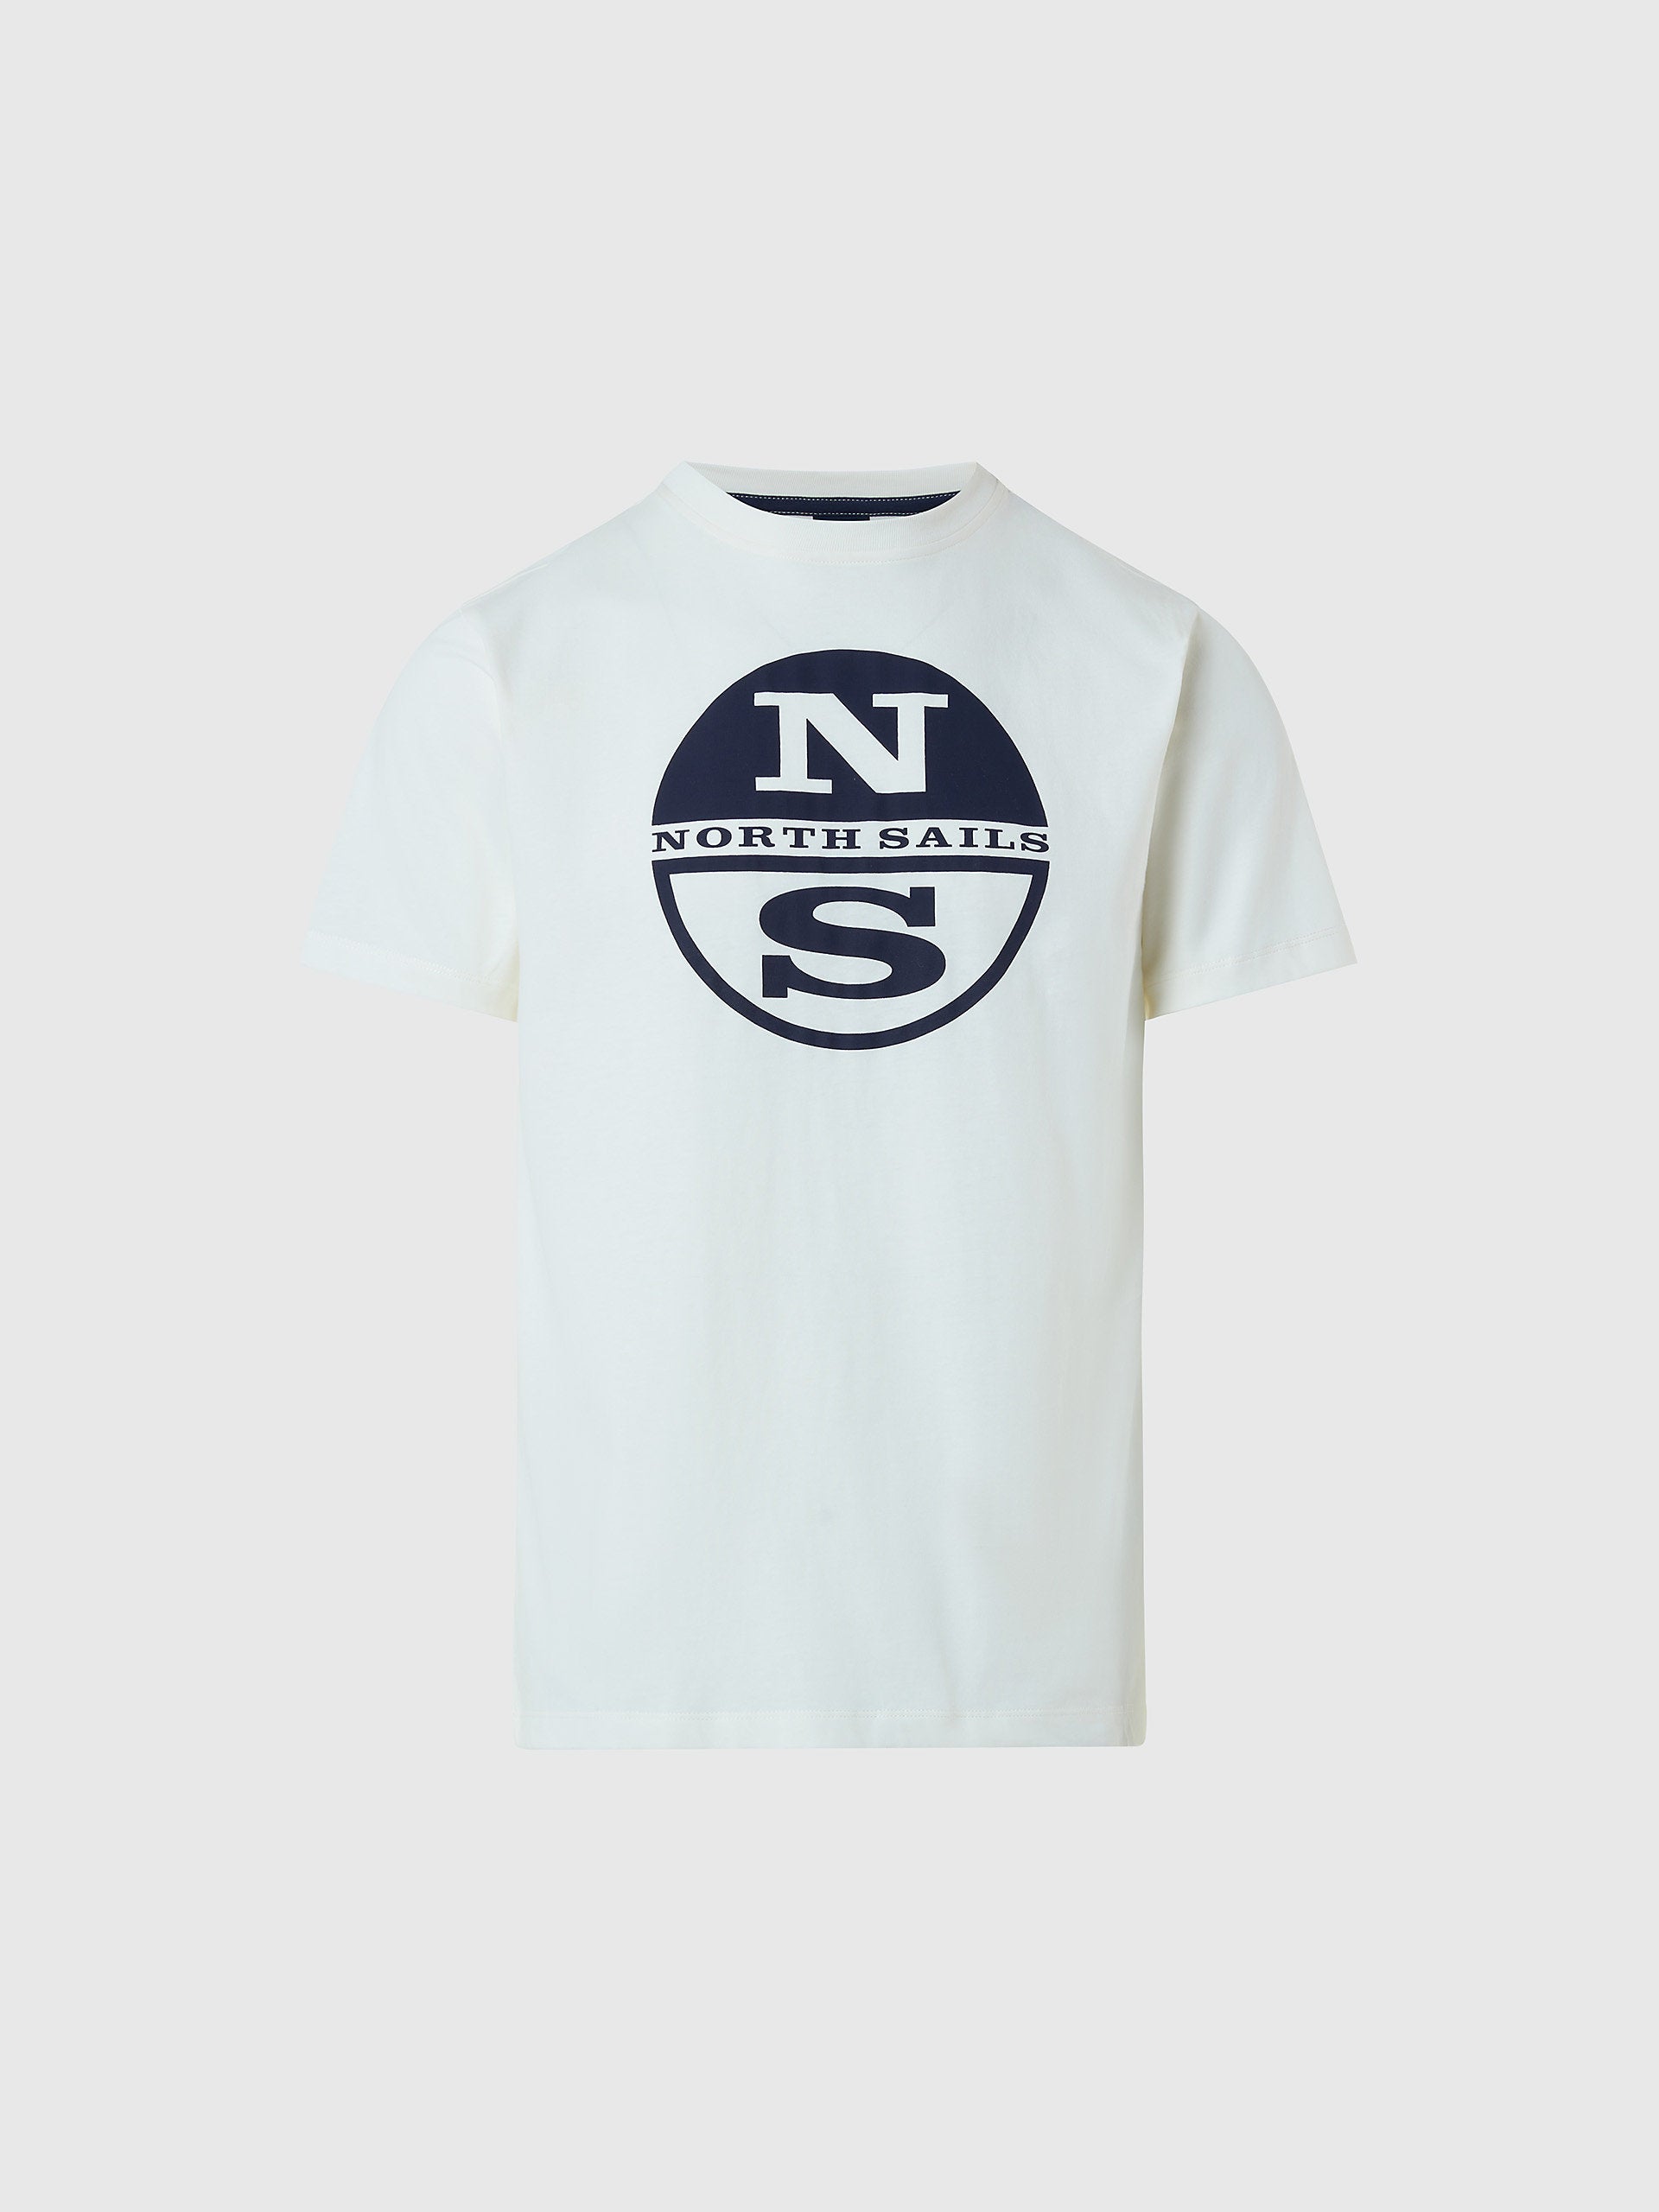 North Sails - T-shirt with logo printNorth SailsMarshmallow4XL